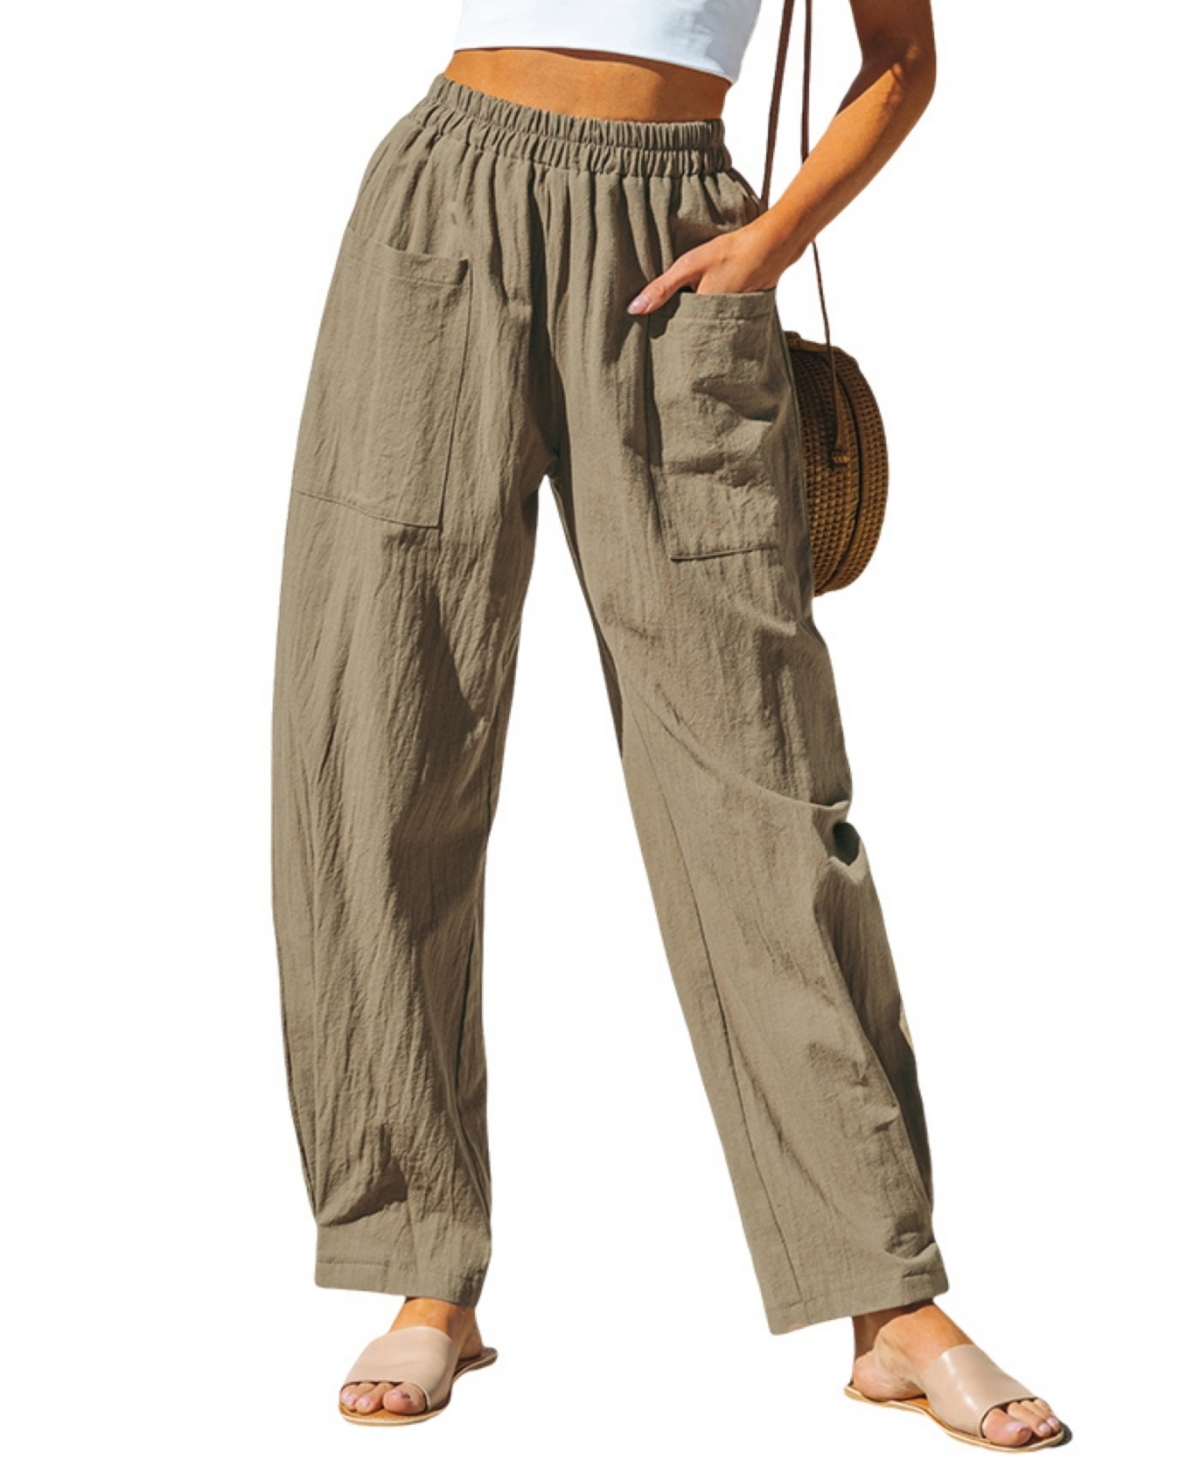 Women's Khaki Elastic Waist Patch Pocket Tapered Leg Pants - Beige/khaki